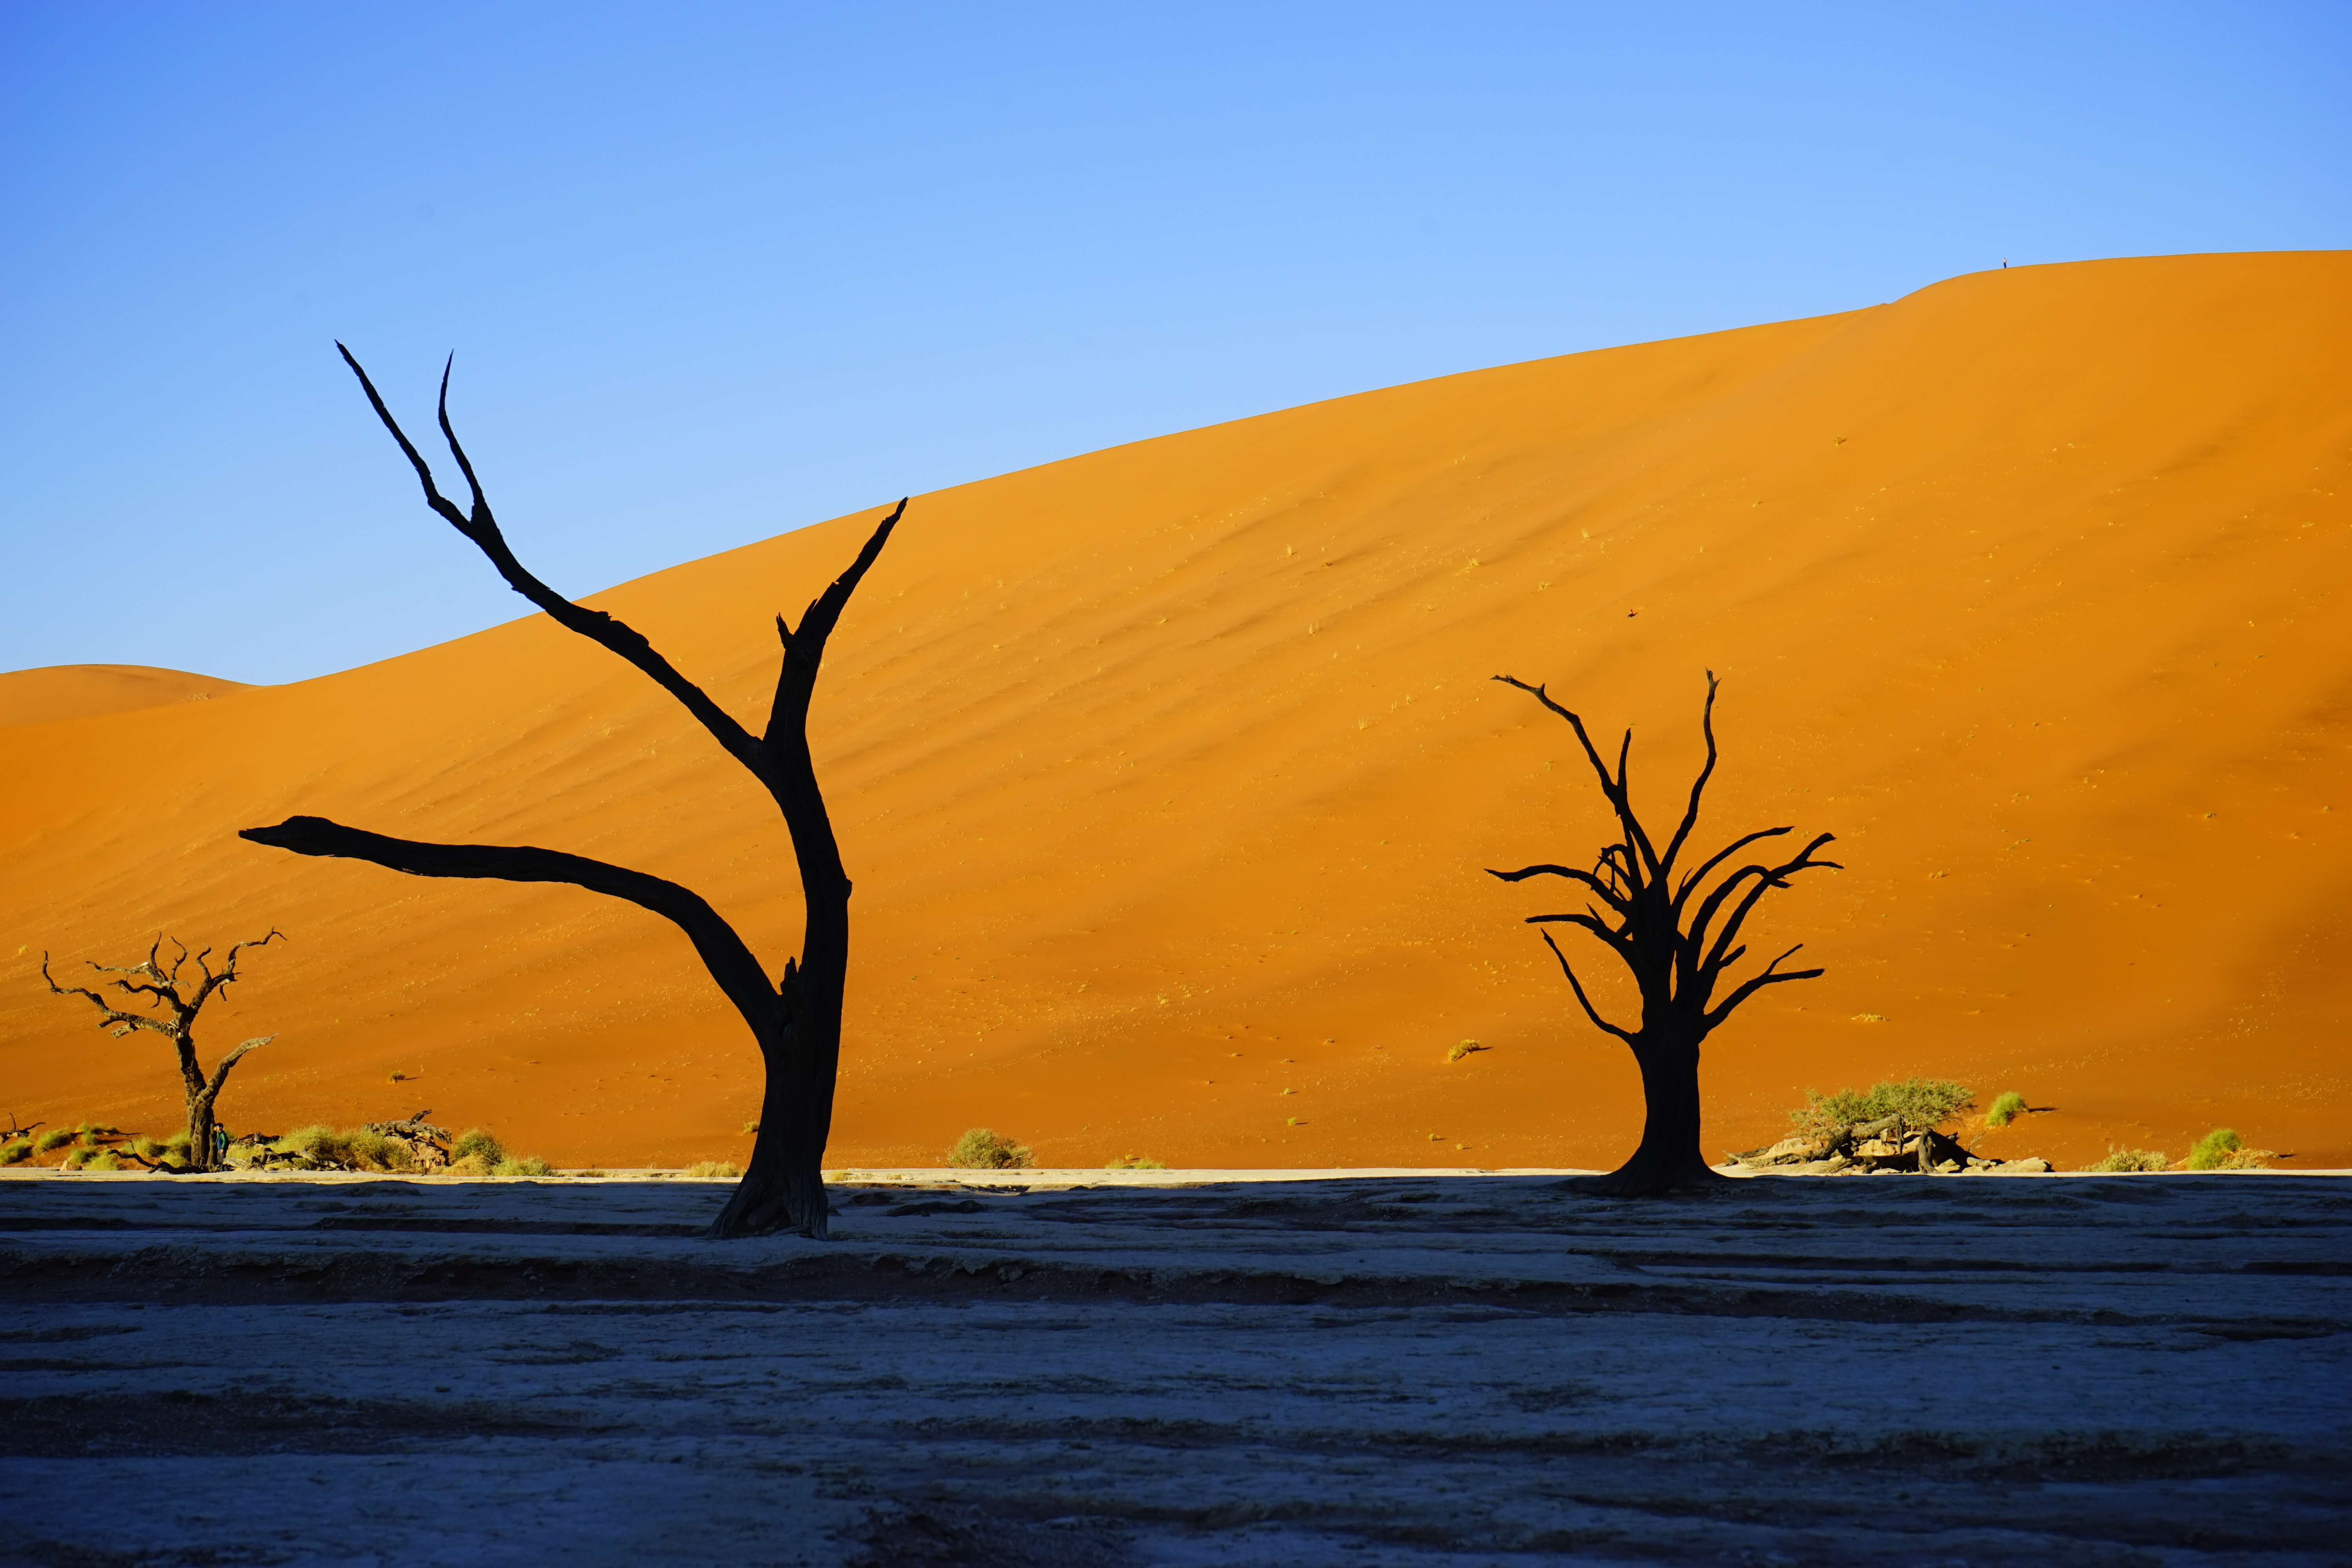 DSC3773 - 【ナミビア ナミブ砂漠・セスリム】絵画のような景色。ナミブ砂漠デッドフレイへの行き方